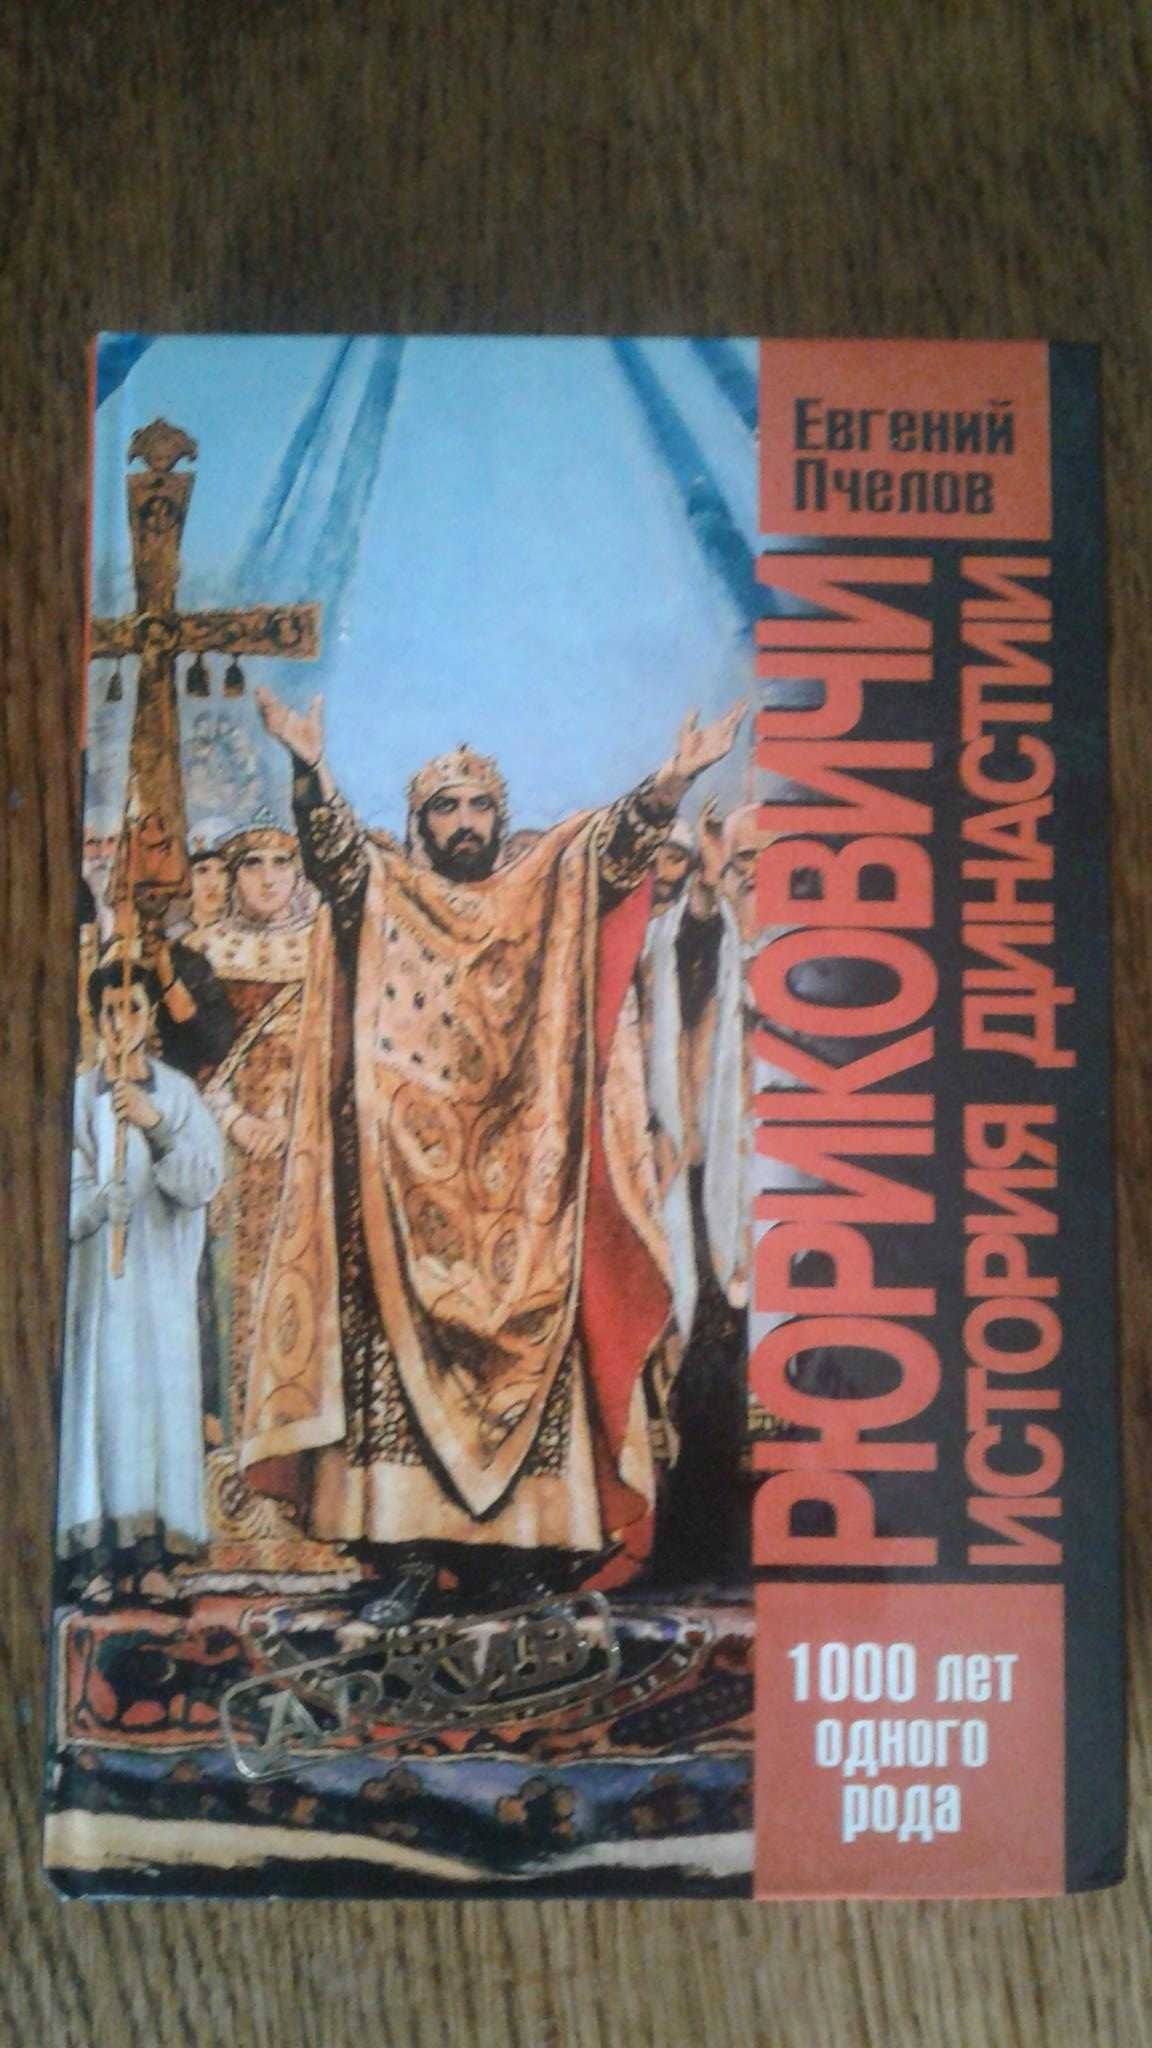 Евгений Пчелов  - Рюриковичи. История династии. Олма Пресс, 2004.